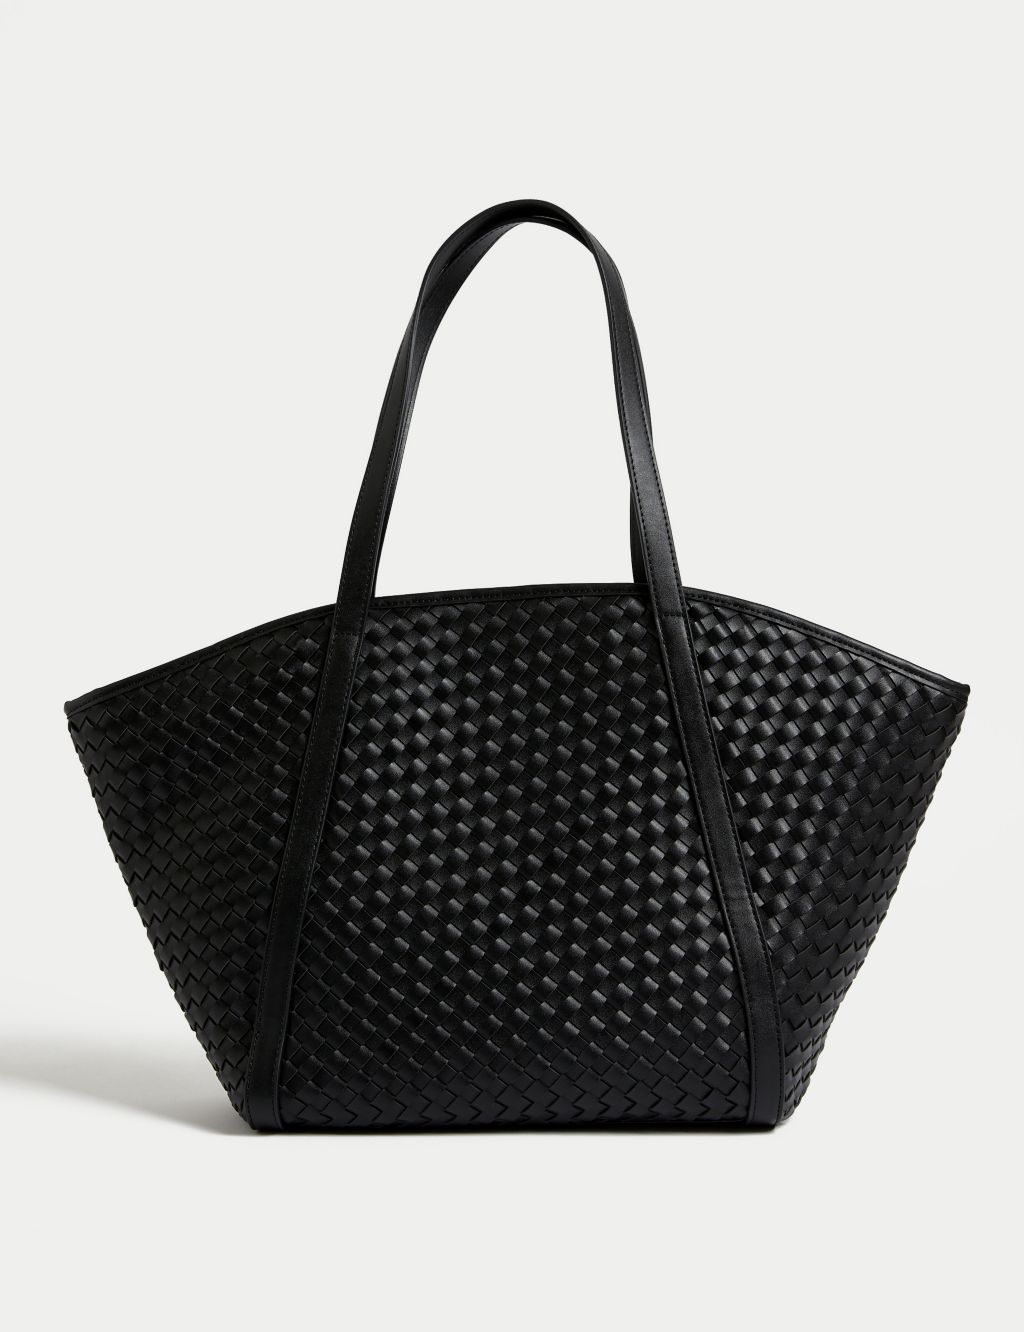 Women's Handbags | M&S